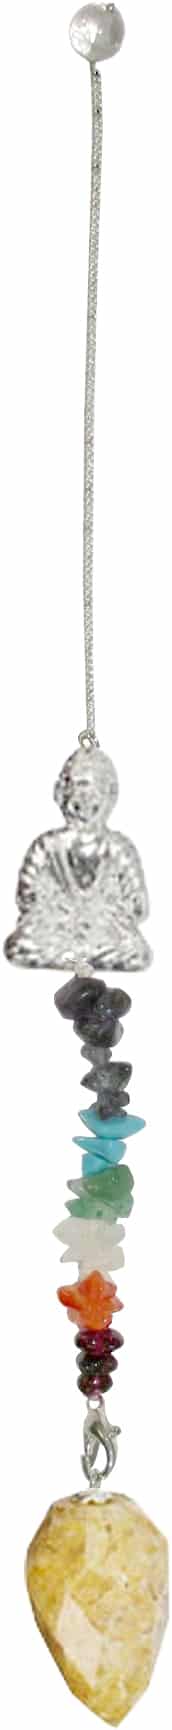 Pendel - Chakra Buddha (goldenfarben) unter Spiritualit?t - Pendel - Chakra Pendel